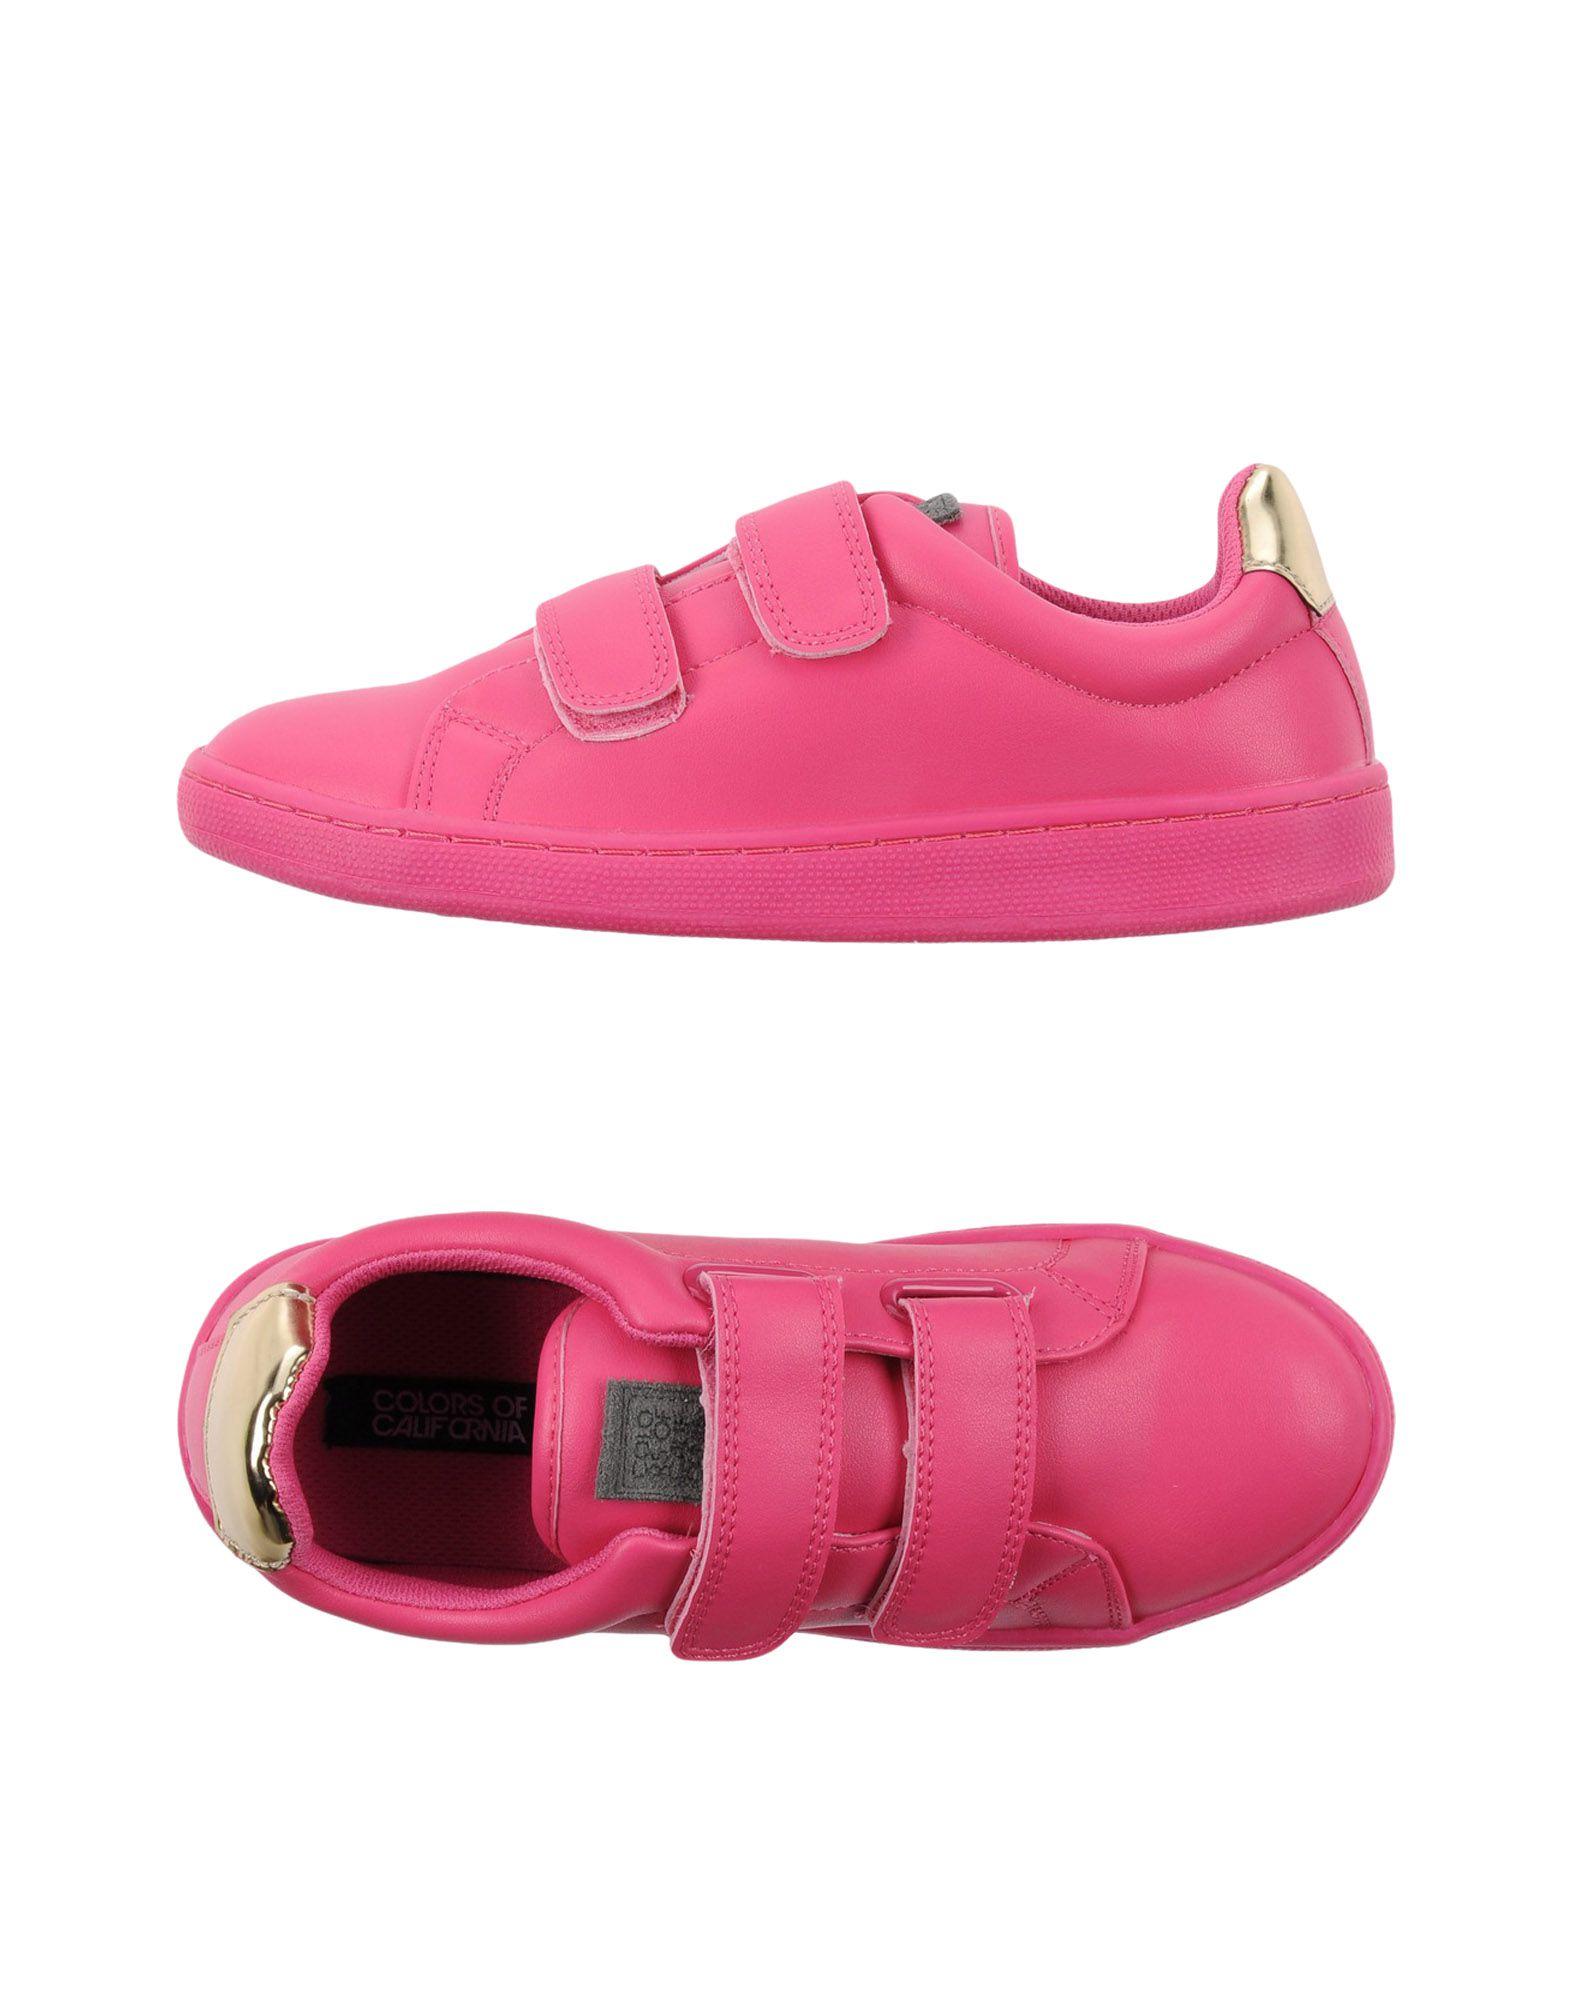 Lyst - Colors Of California Low-tops & Sneakers in Pink